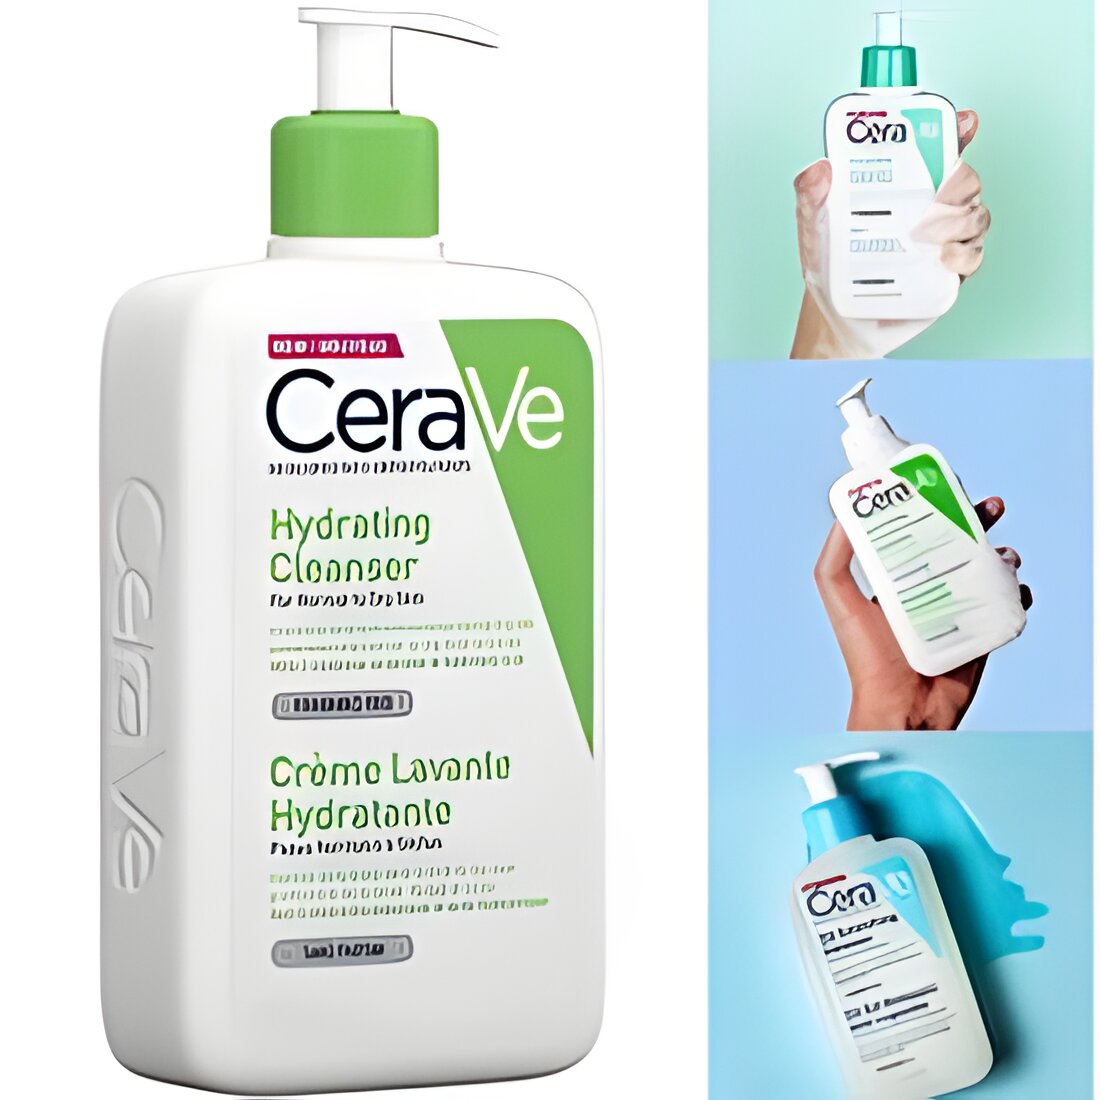 Free CeraVe Cleansing Samples